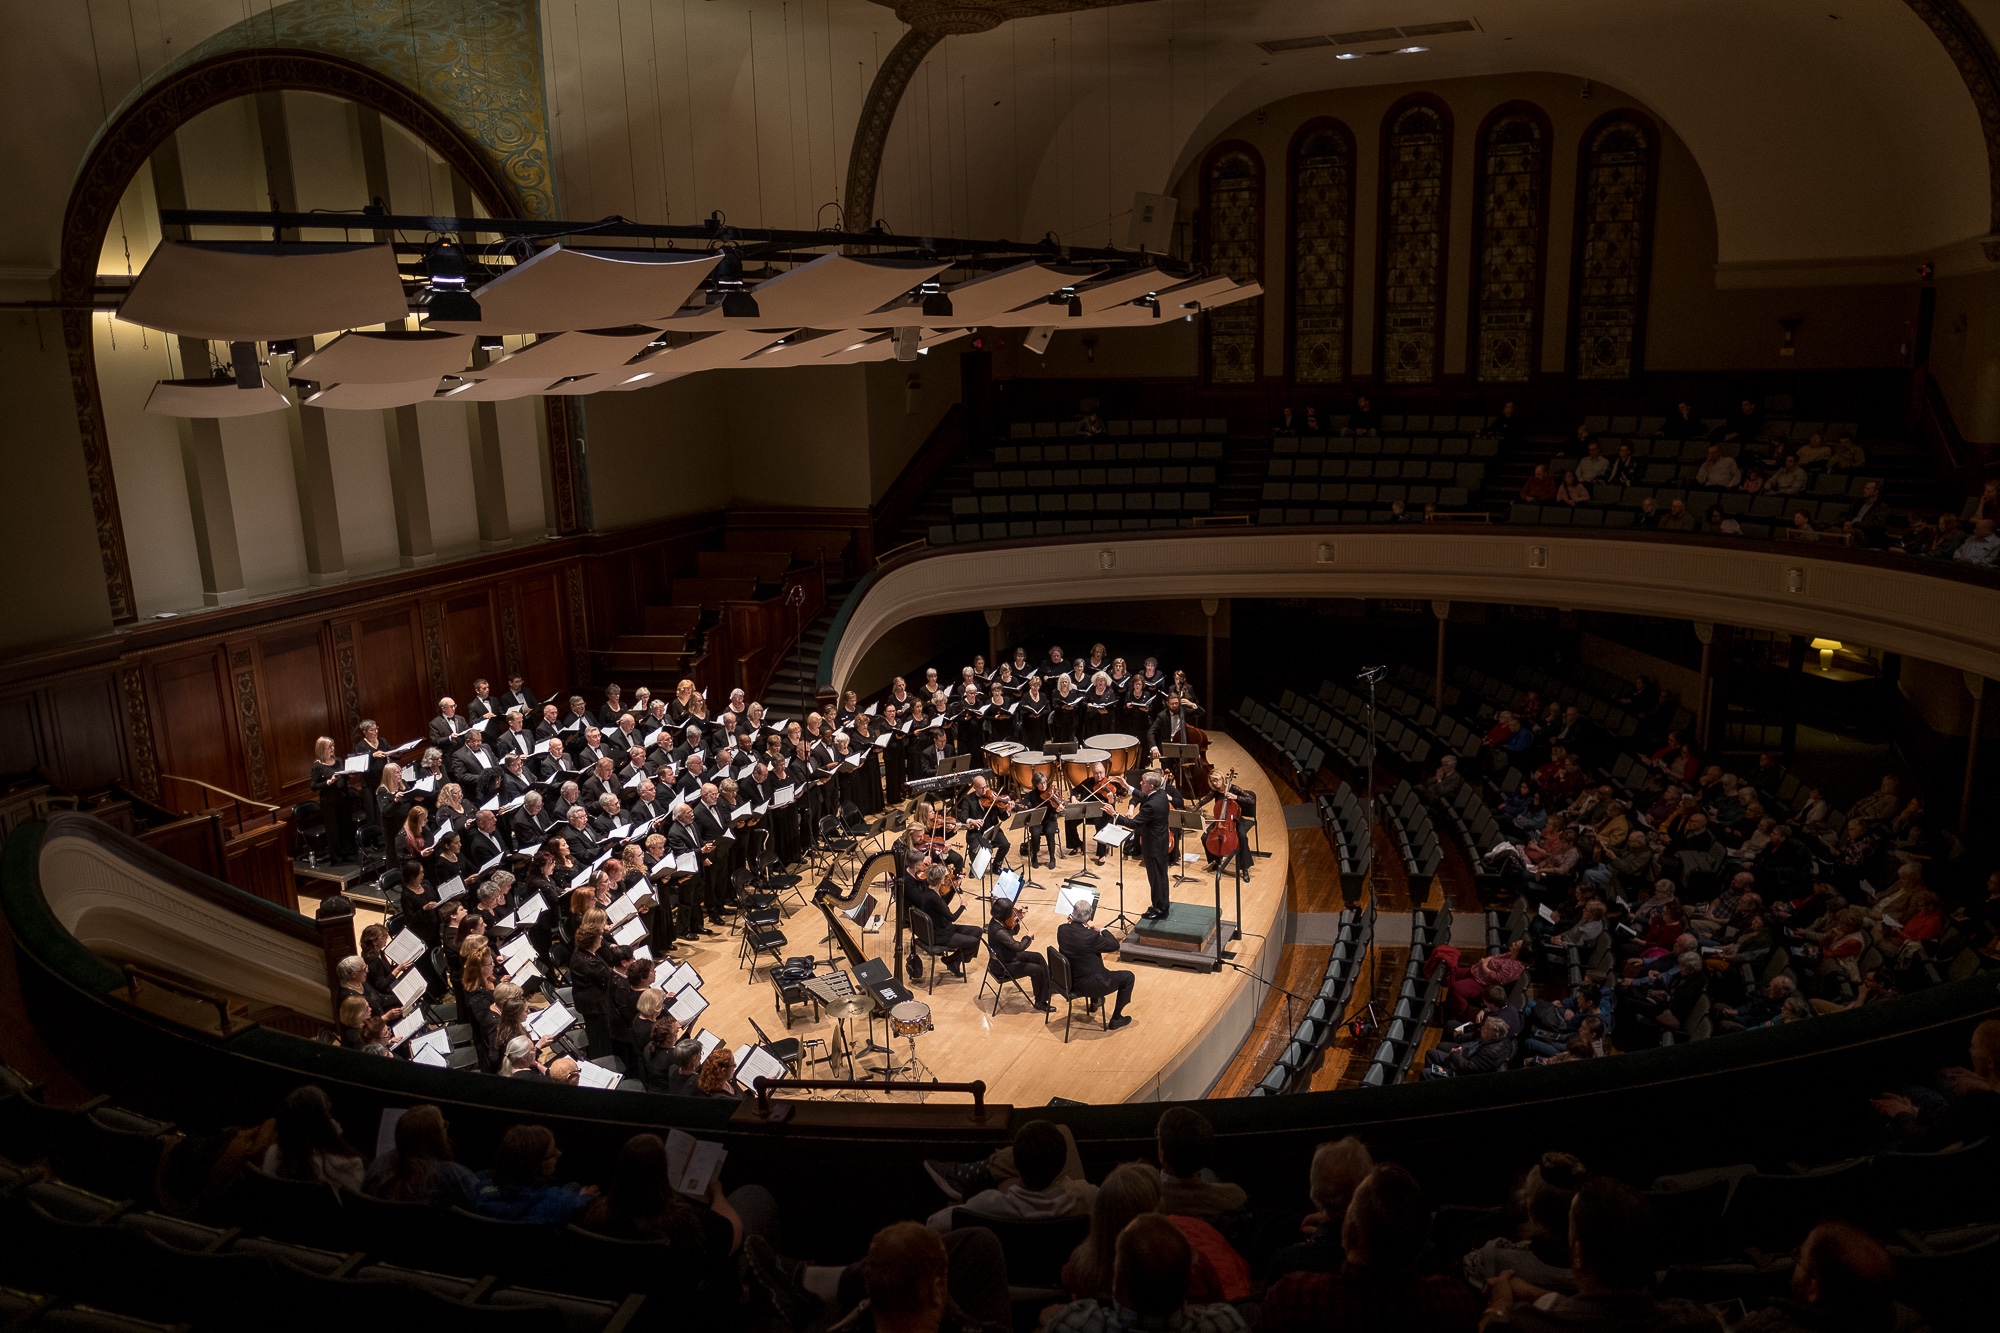 Rochester Oratorio Society presents free holiday concert at Hochstein